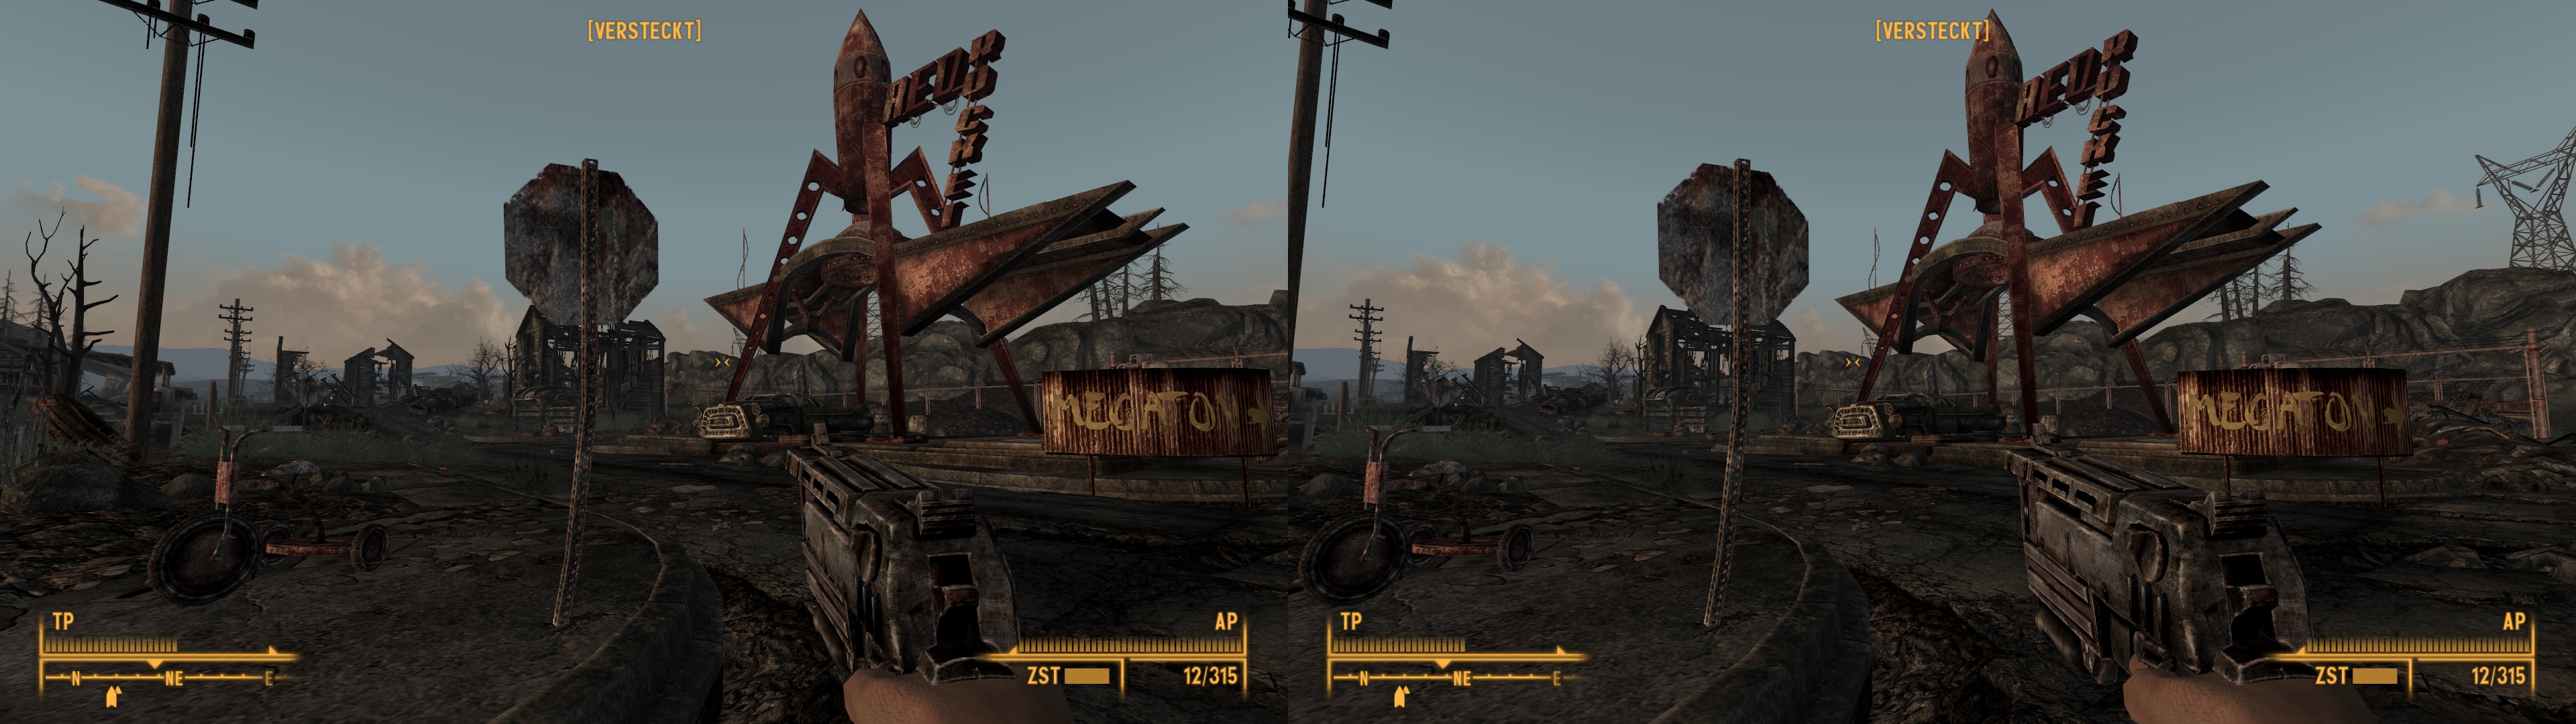 Fallout 3 Crash At New Game boostersu